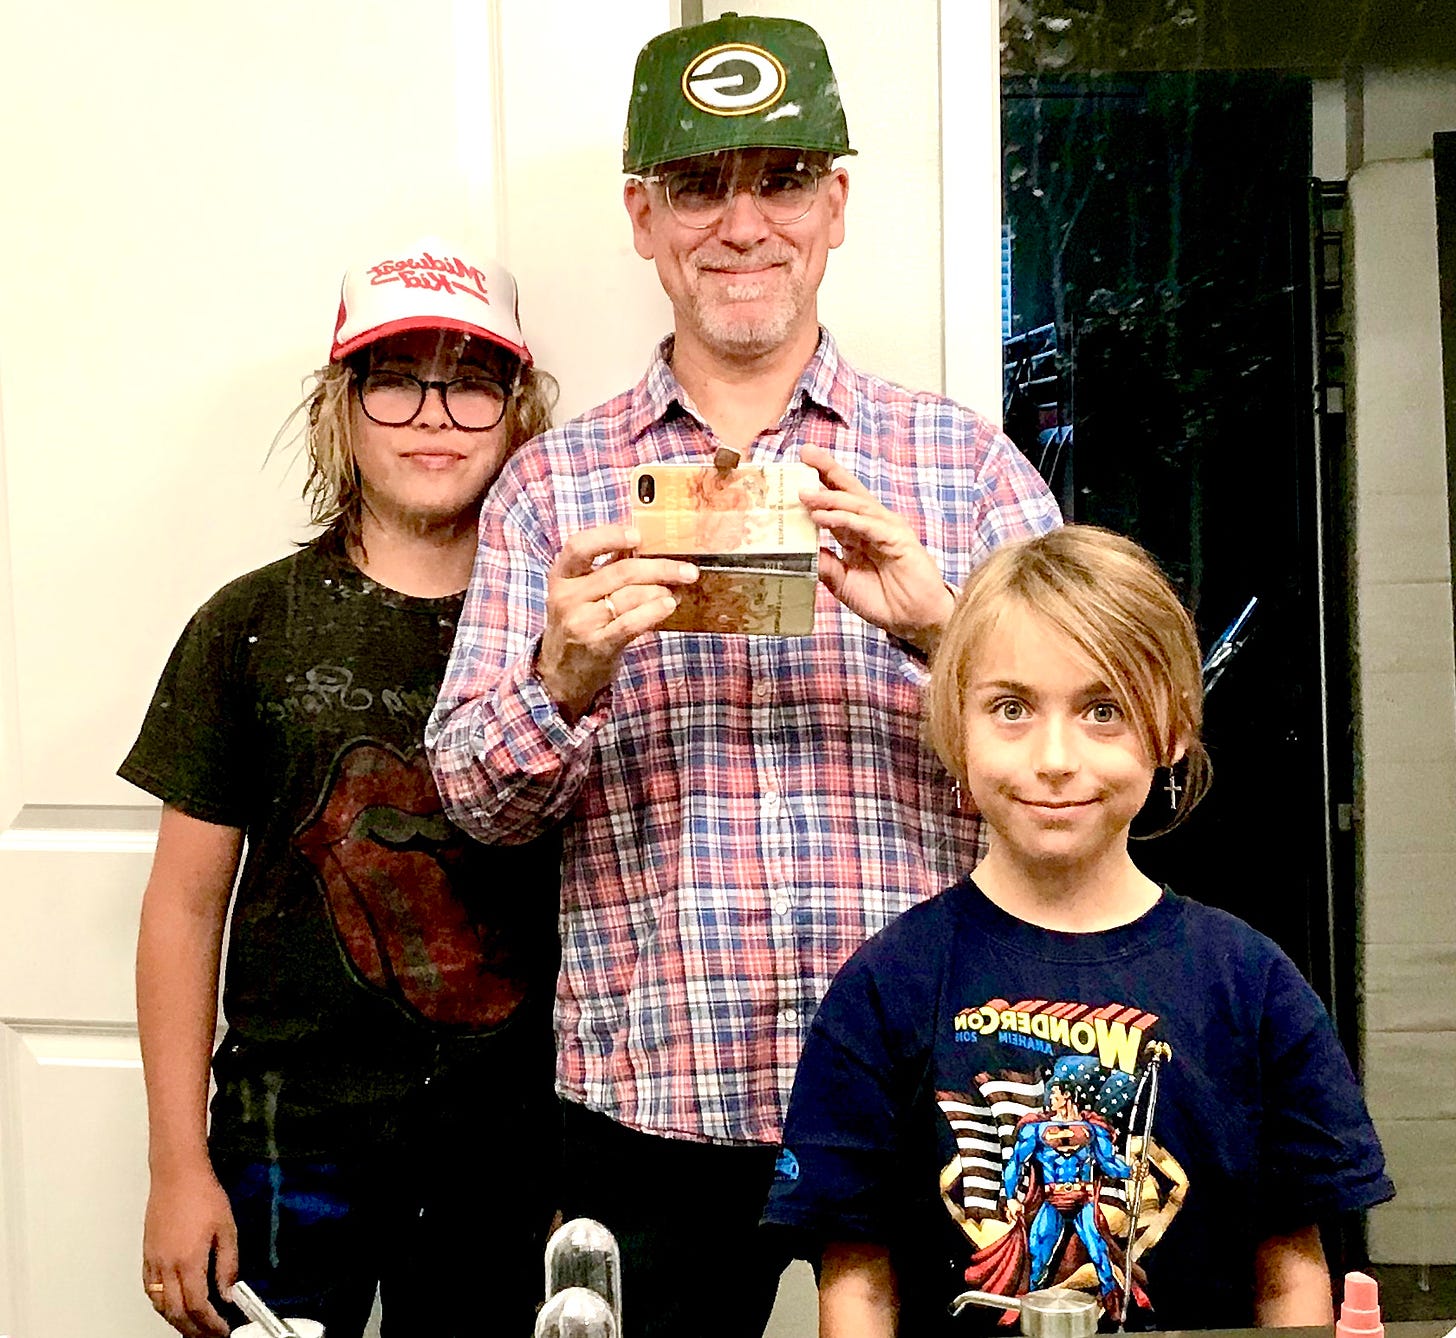 Faux Jean wears Green Bay Packers hat in mirror selfie with his kids.